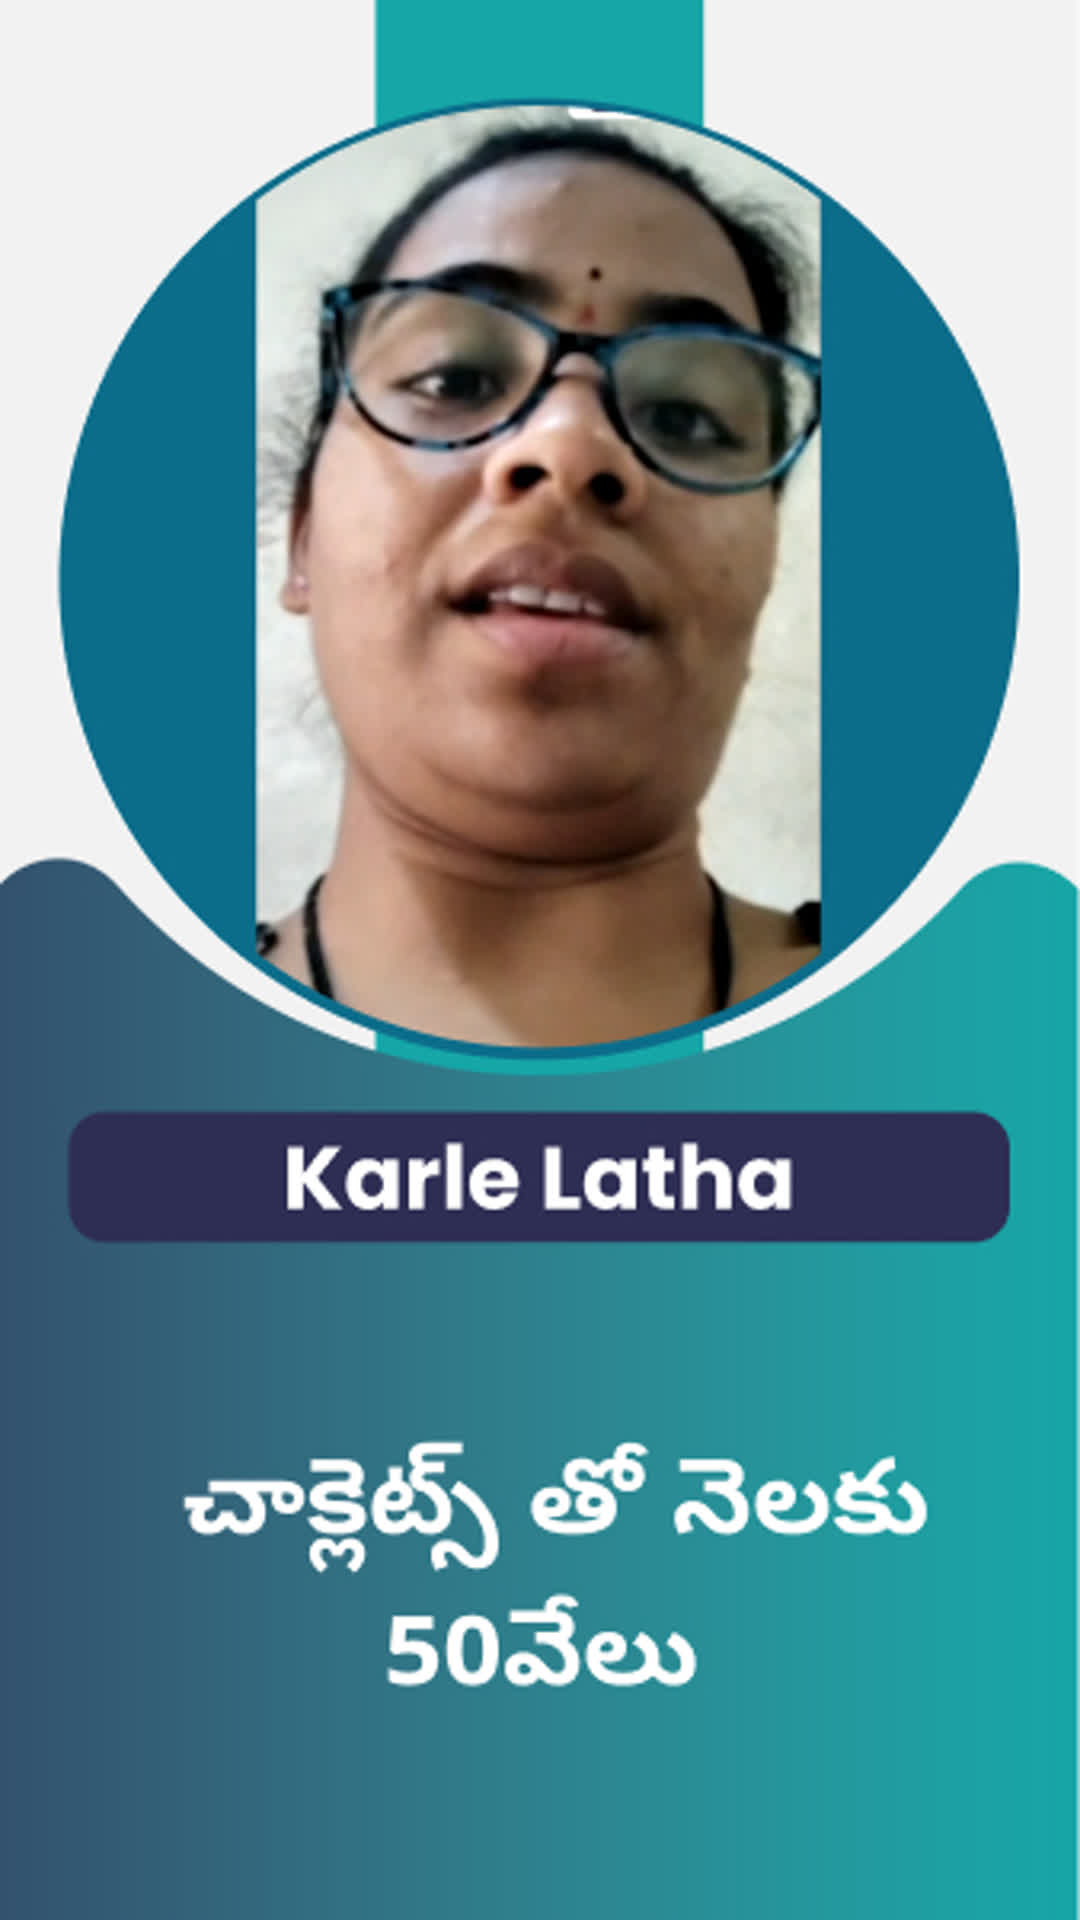 Karle Lata's Honest Review of ffreedom app - Pune ,Maharashtra